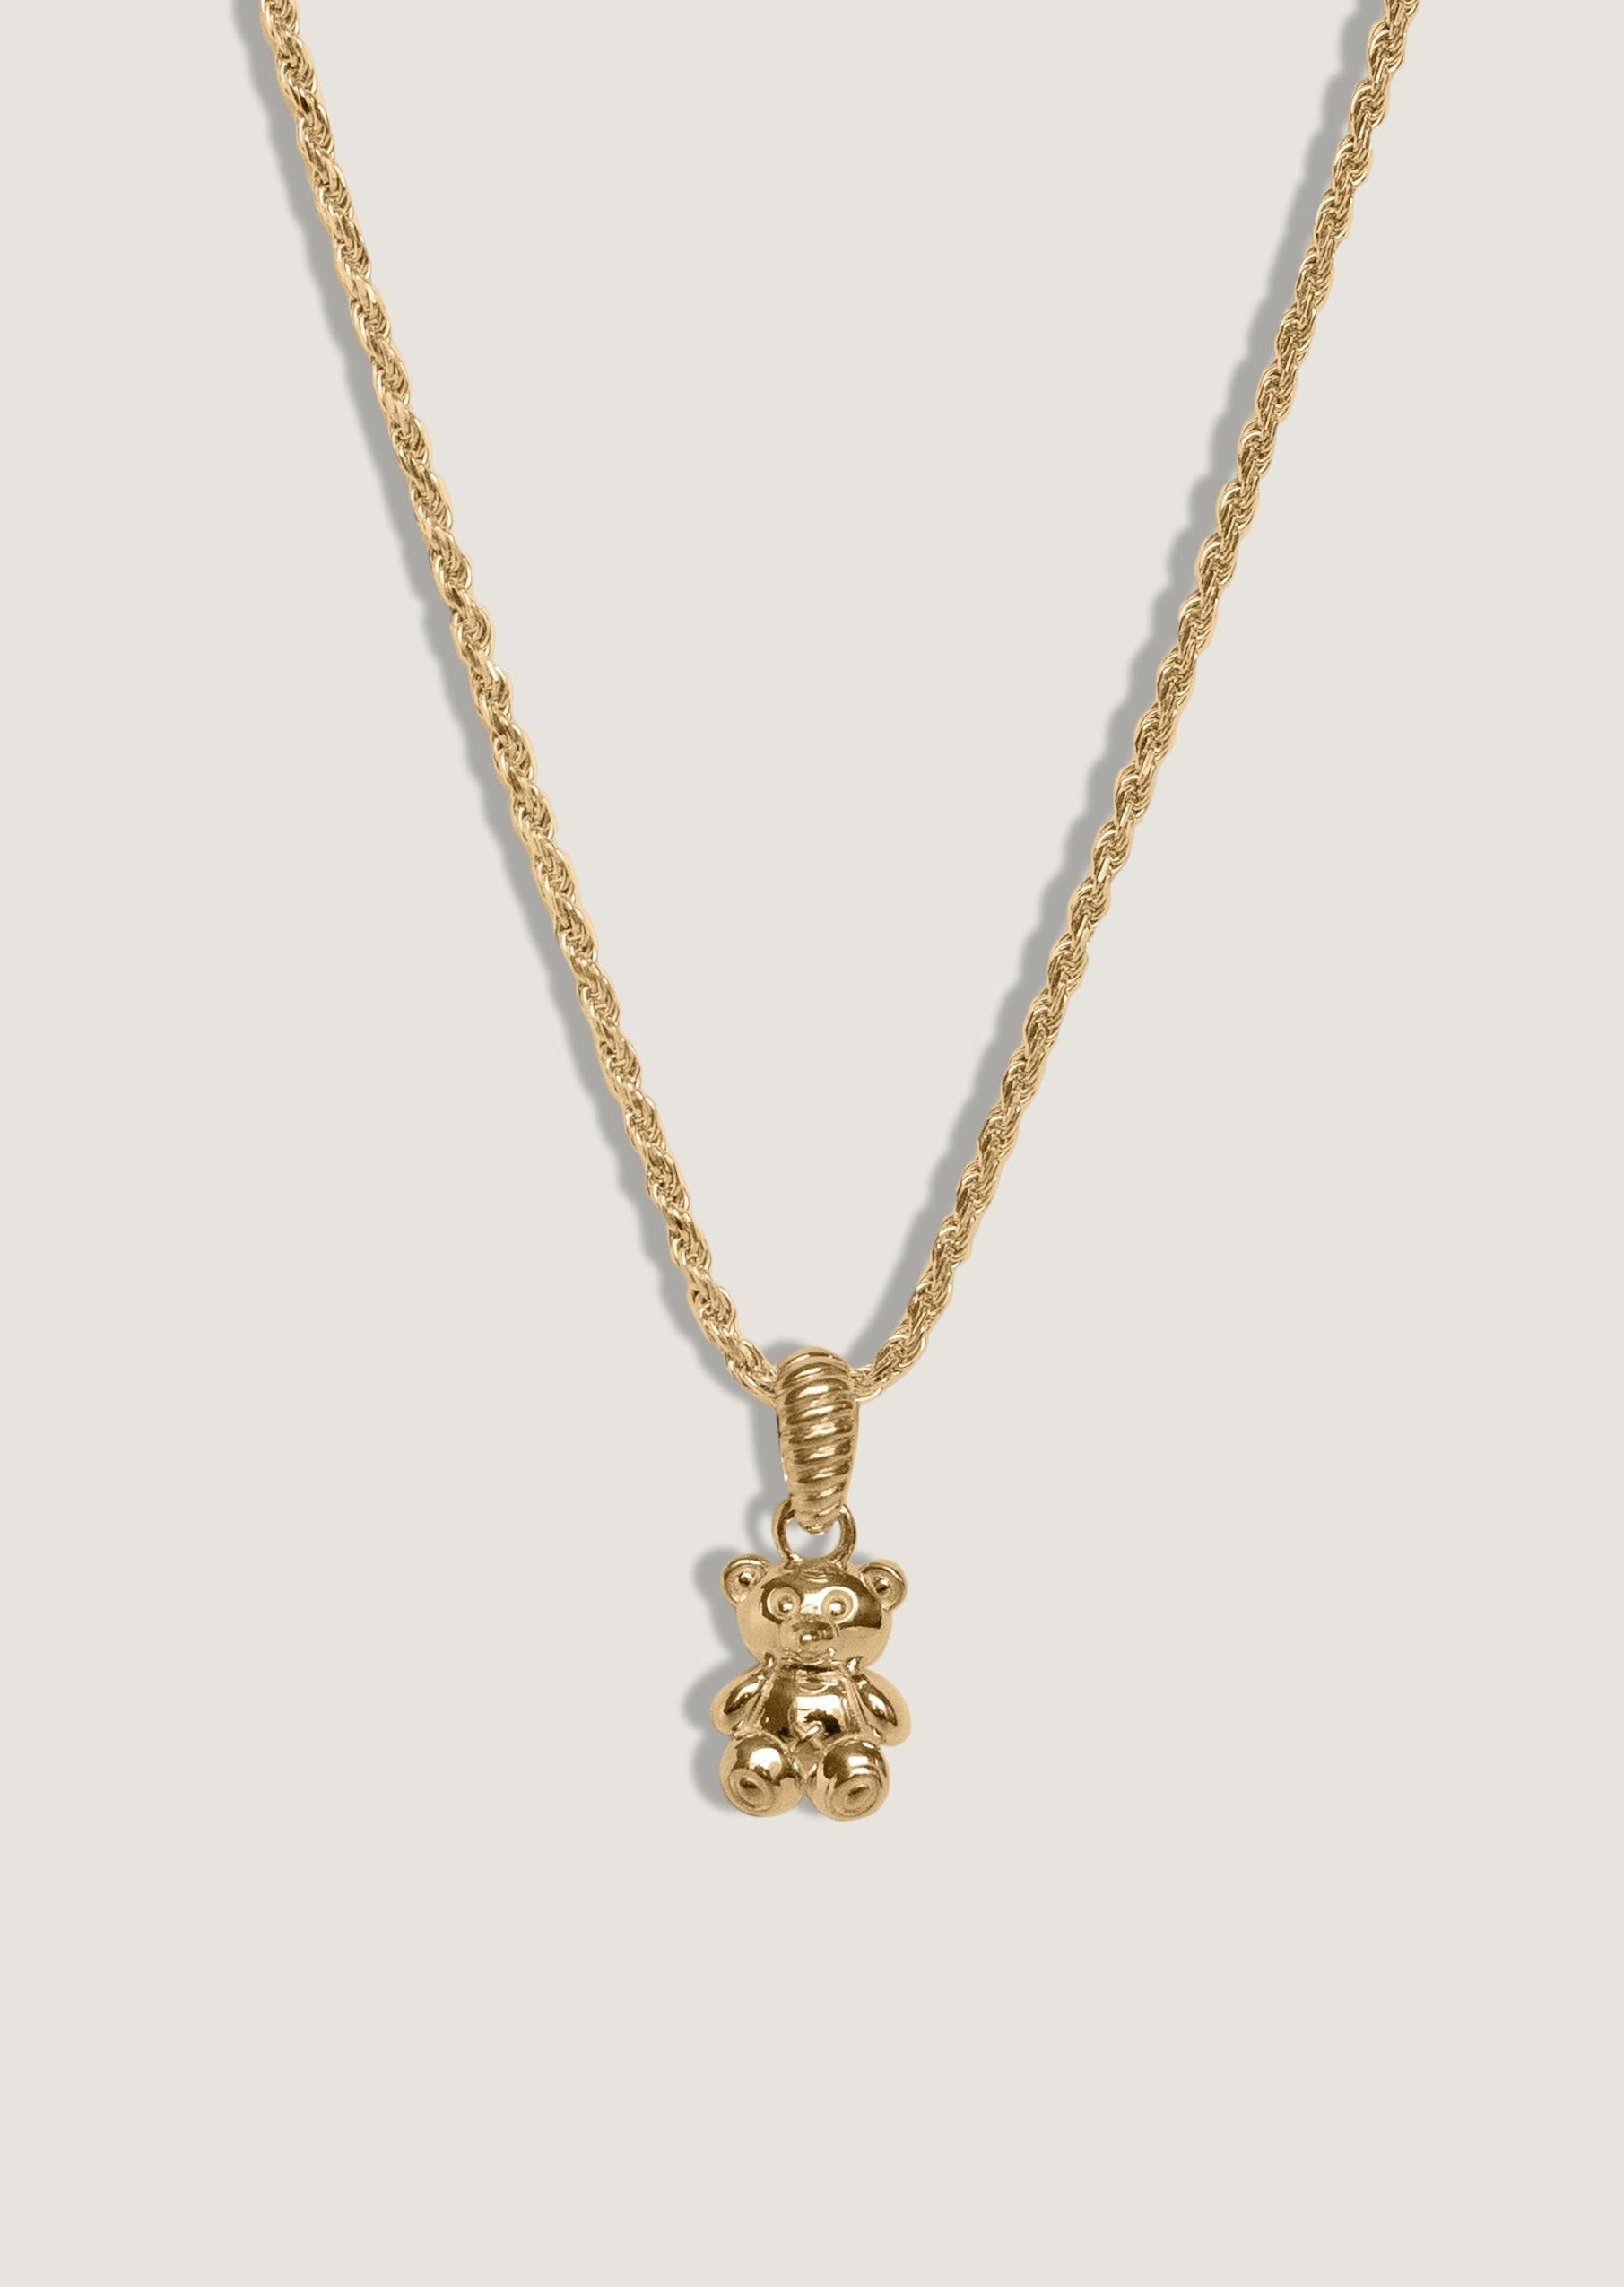 Long Necklace, Gold Necklace, Gold Key Necklace, Modern Necklace, Fashion  Jewelry, Gold Jewelry, Jewelry Gift